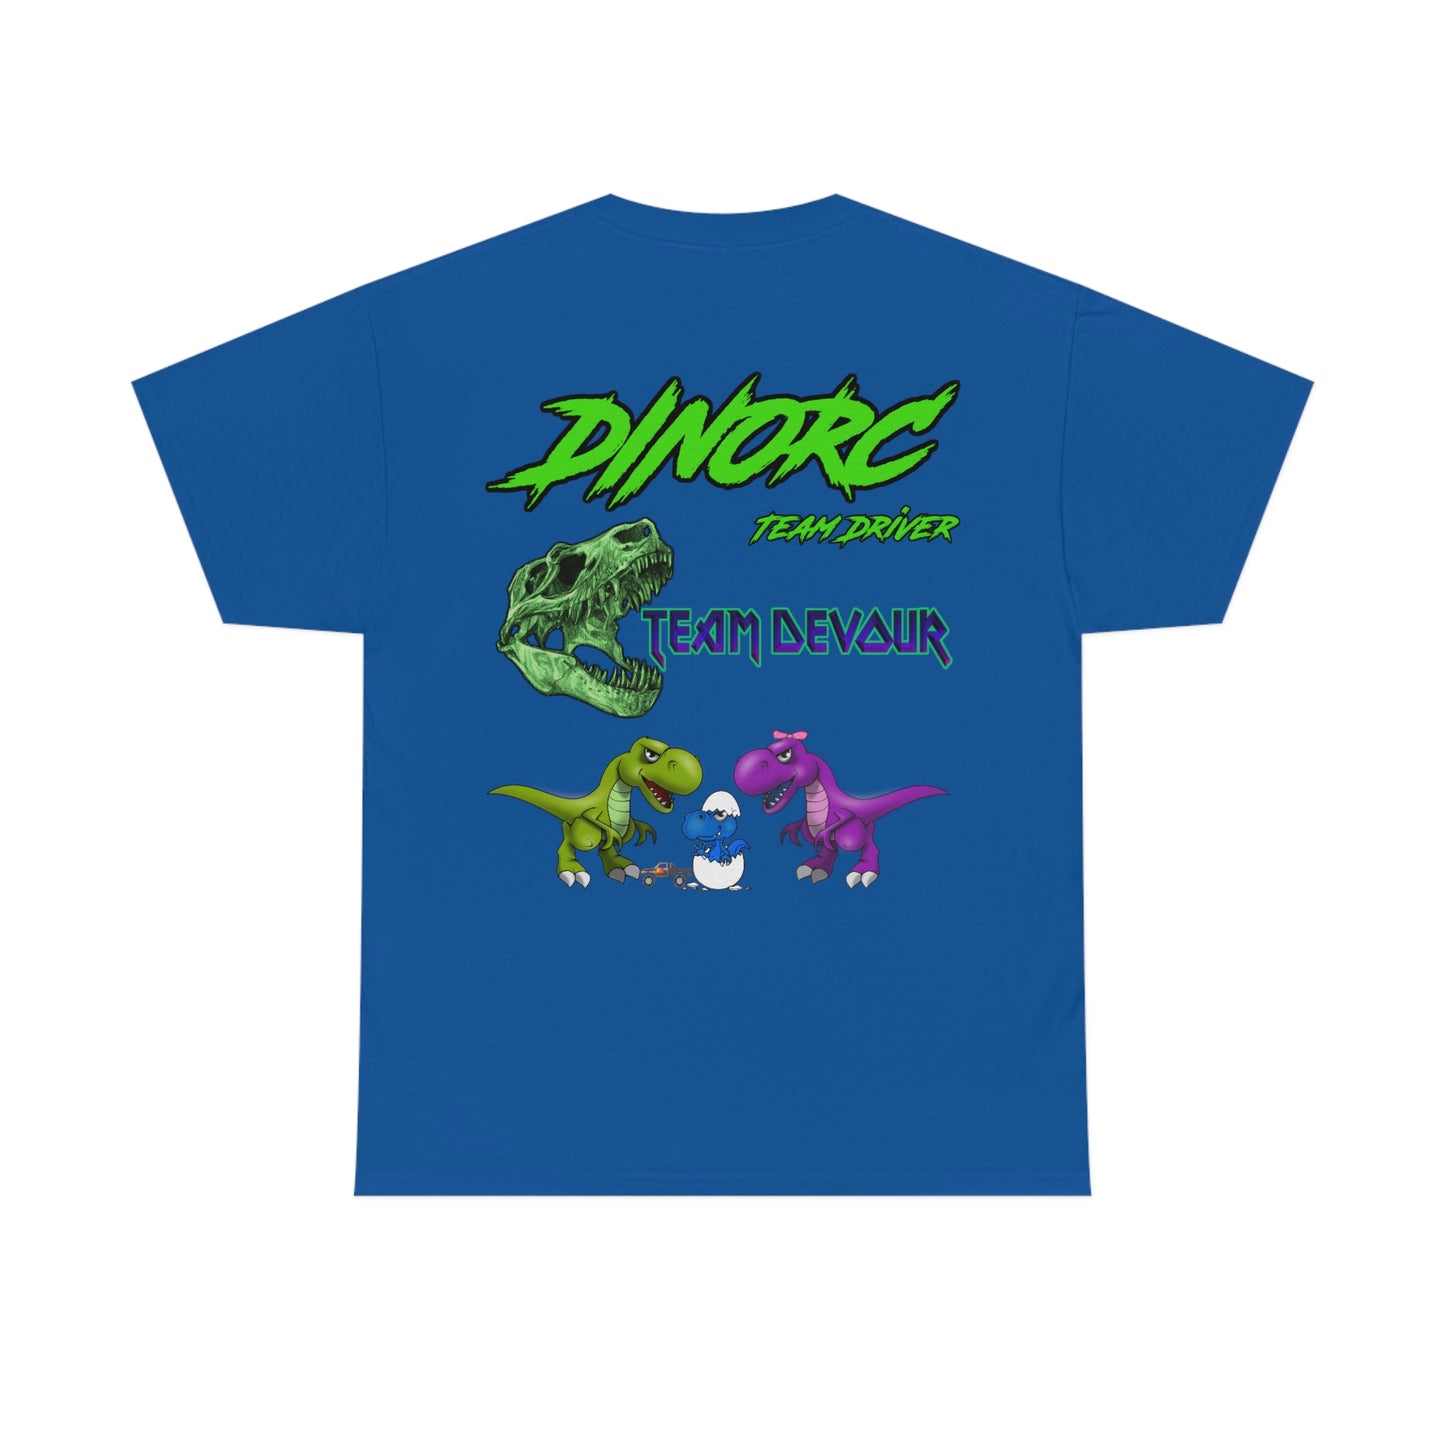 Team Driver Justin Perez Team Devour logo Front and Back DinoRc Logo T-Shirt S-5x 5 colors